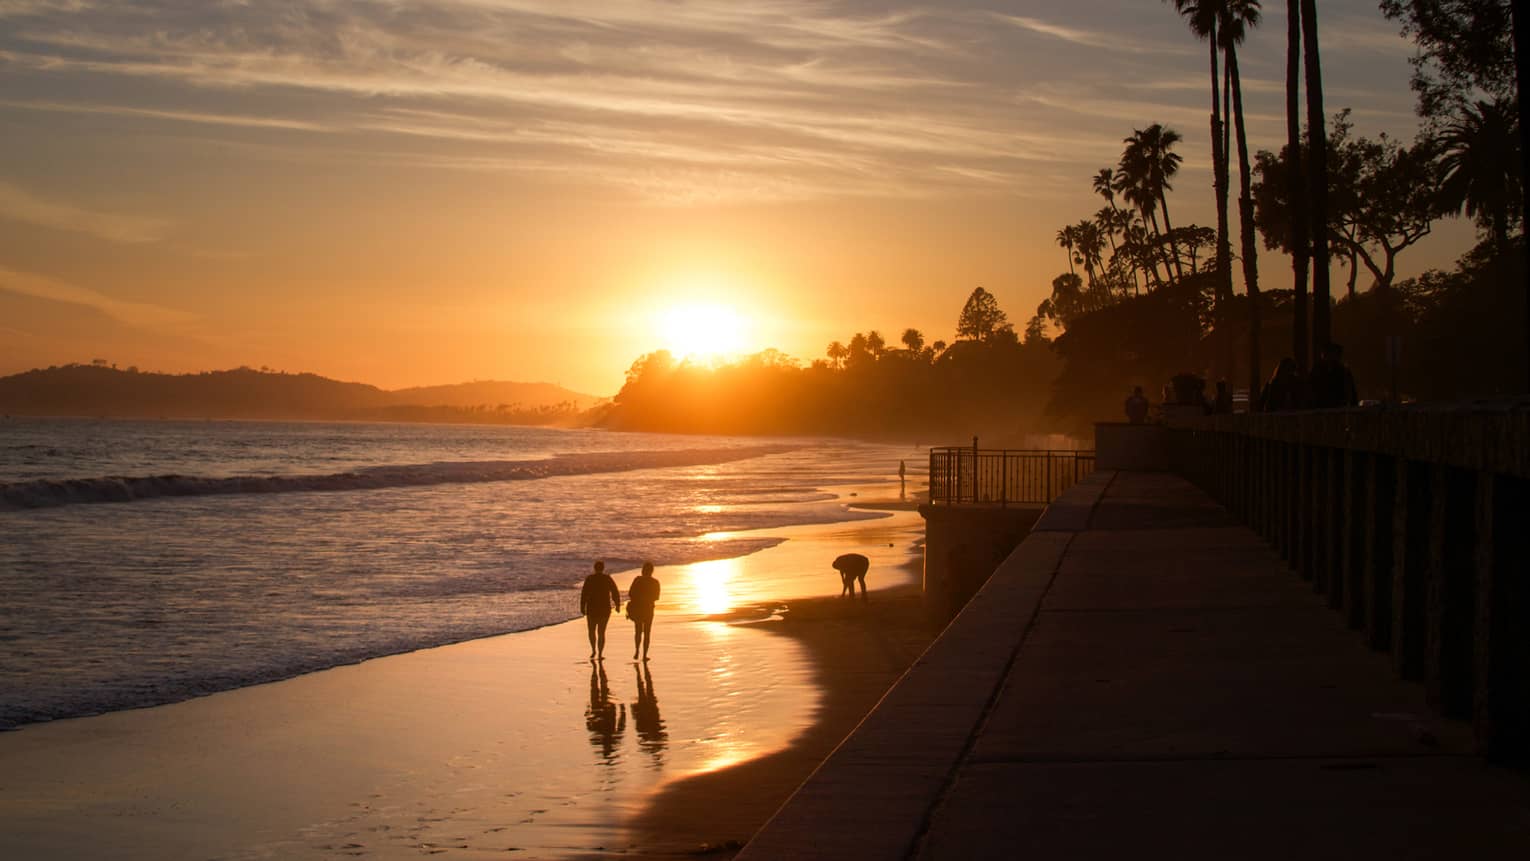 Silhouettes of three people walking along coast on sandy beach, orange sunset